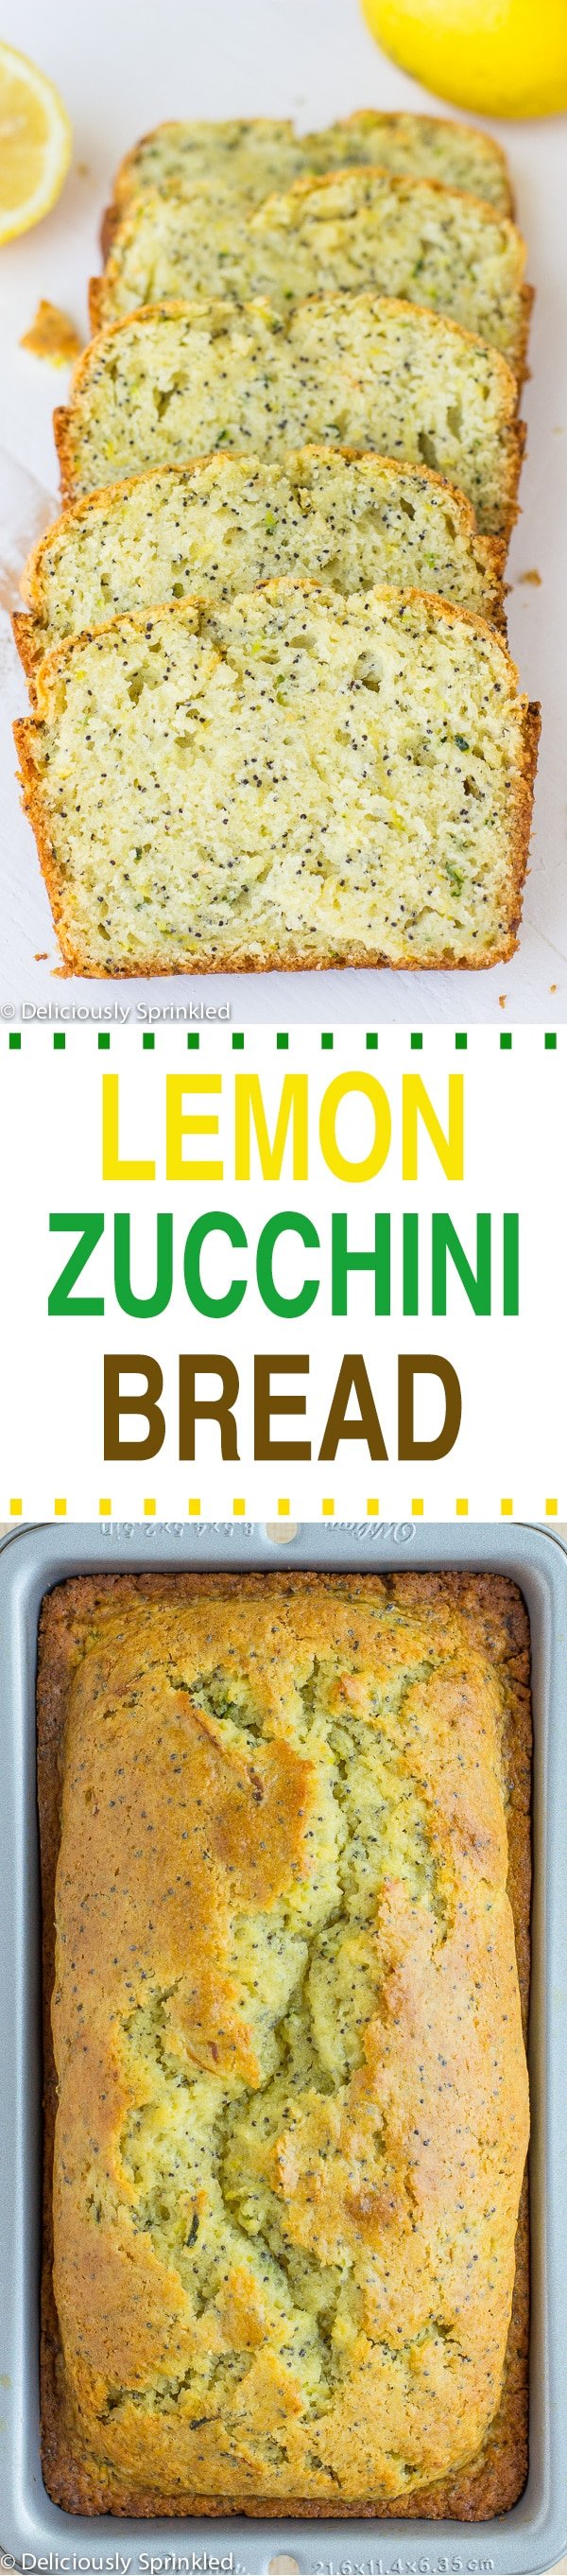 LEMON ZUCCHINI BREAD